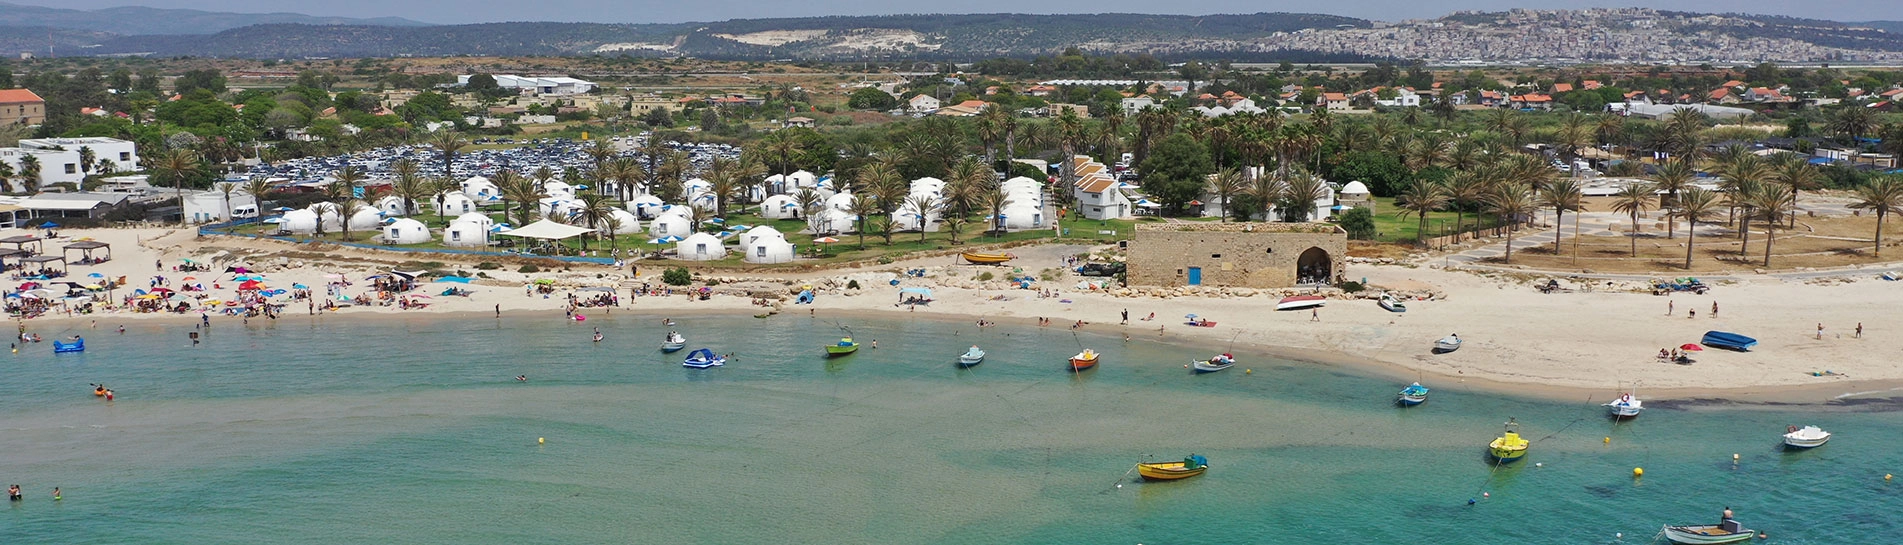  Habonim  strand - Izrael